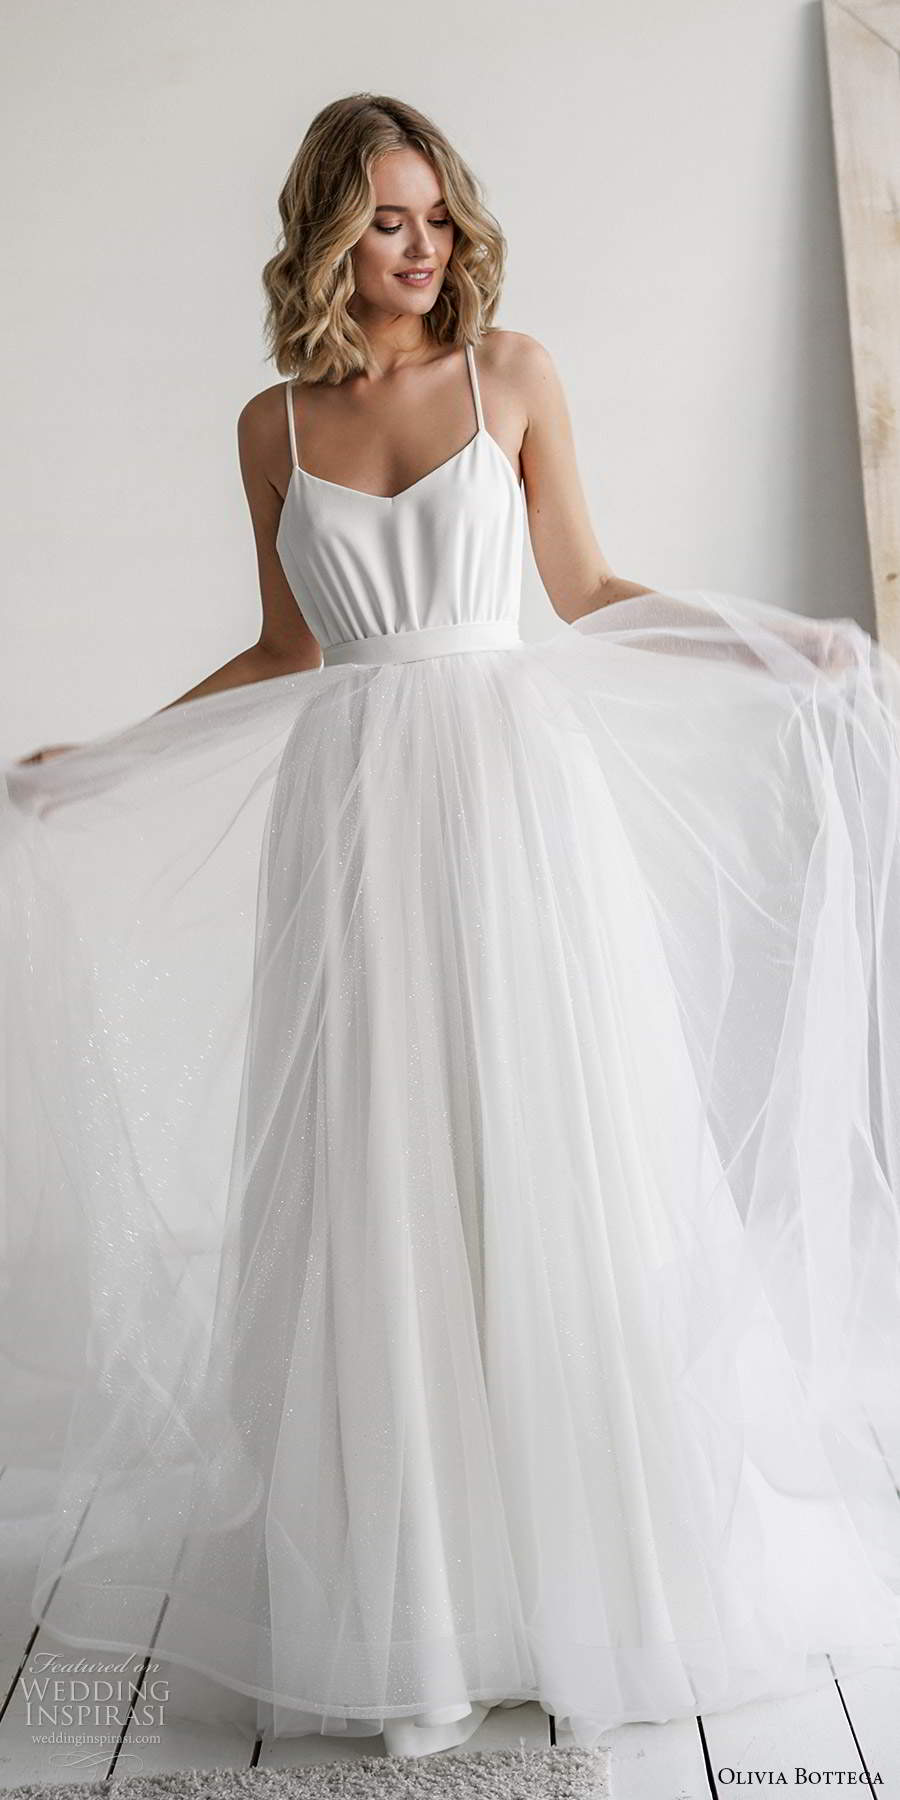 olivia bottega 2021 bridal sleeveless straps v neckline blouson top a line ball gown wedding dress (14) mv